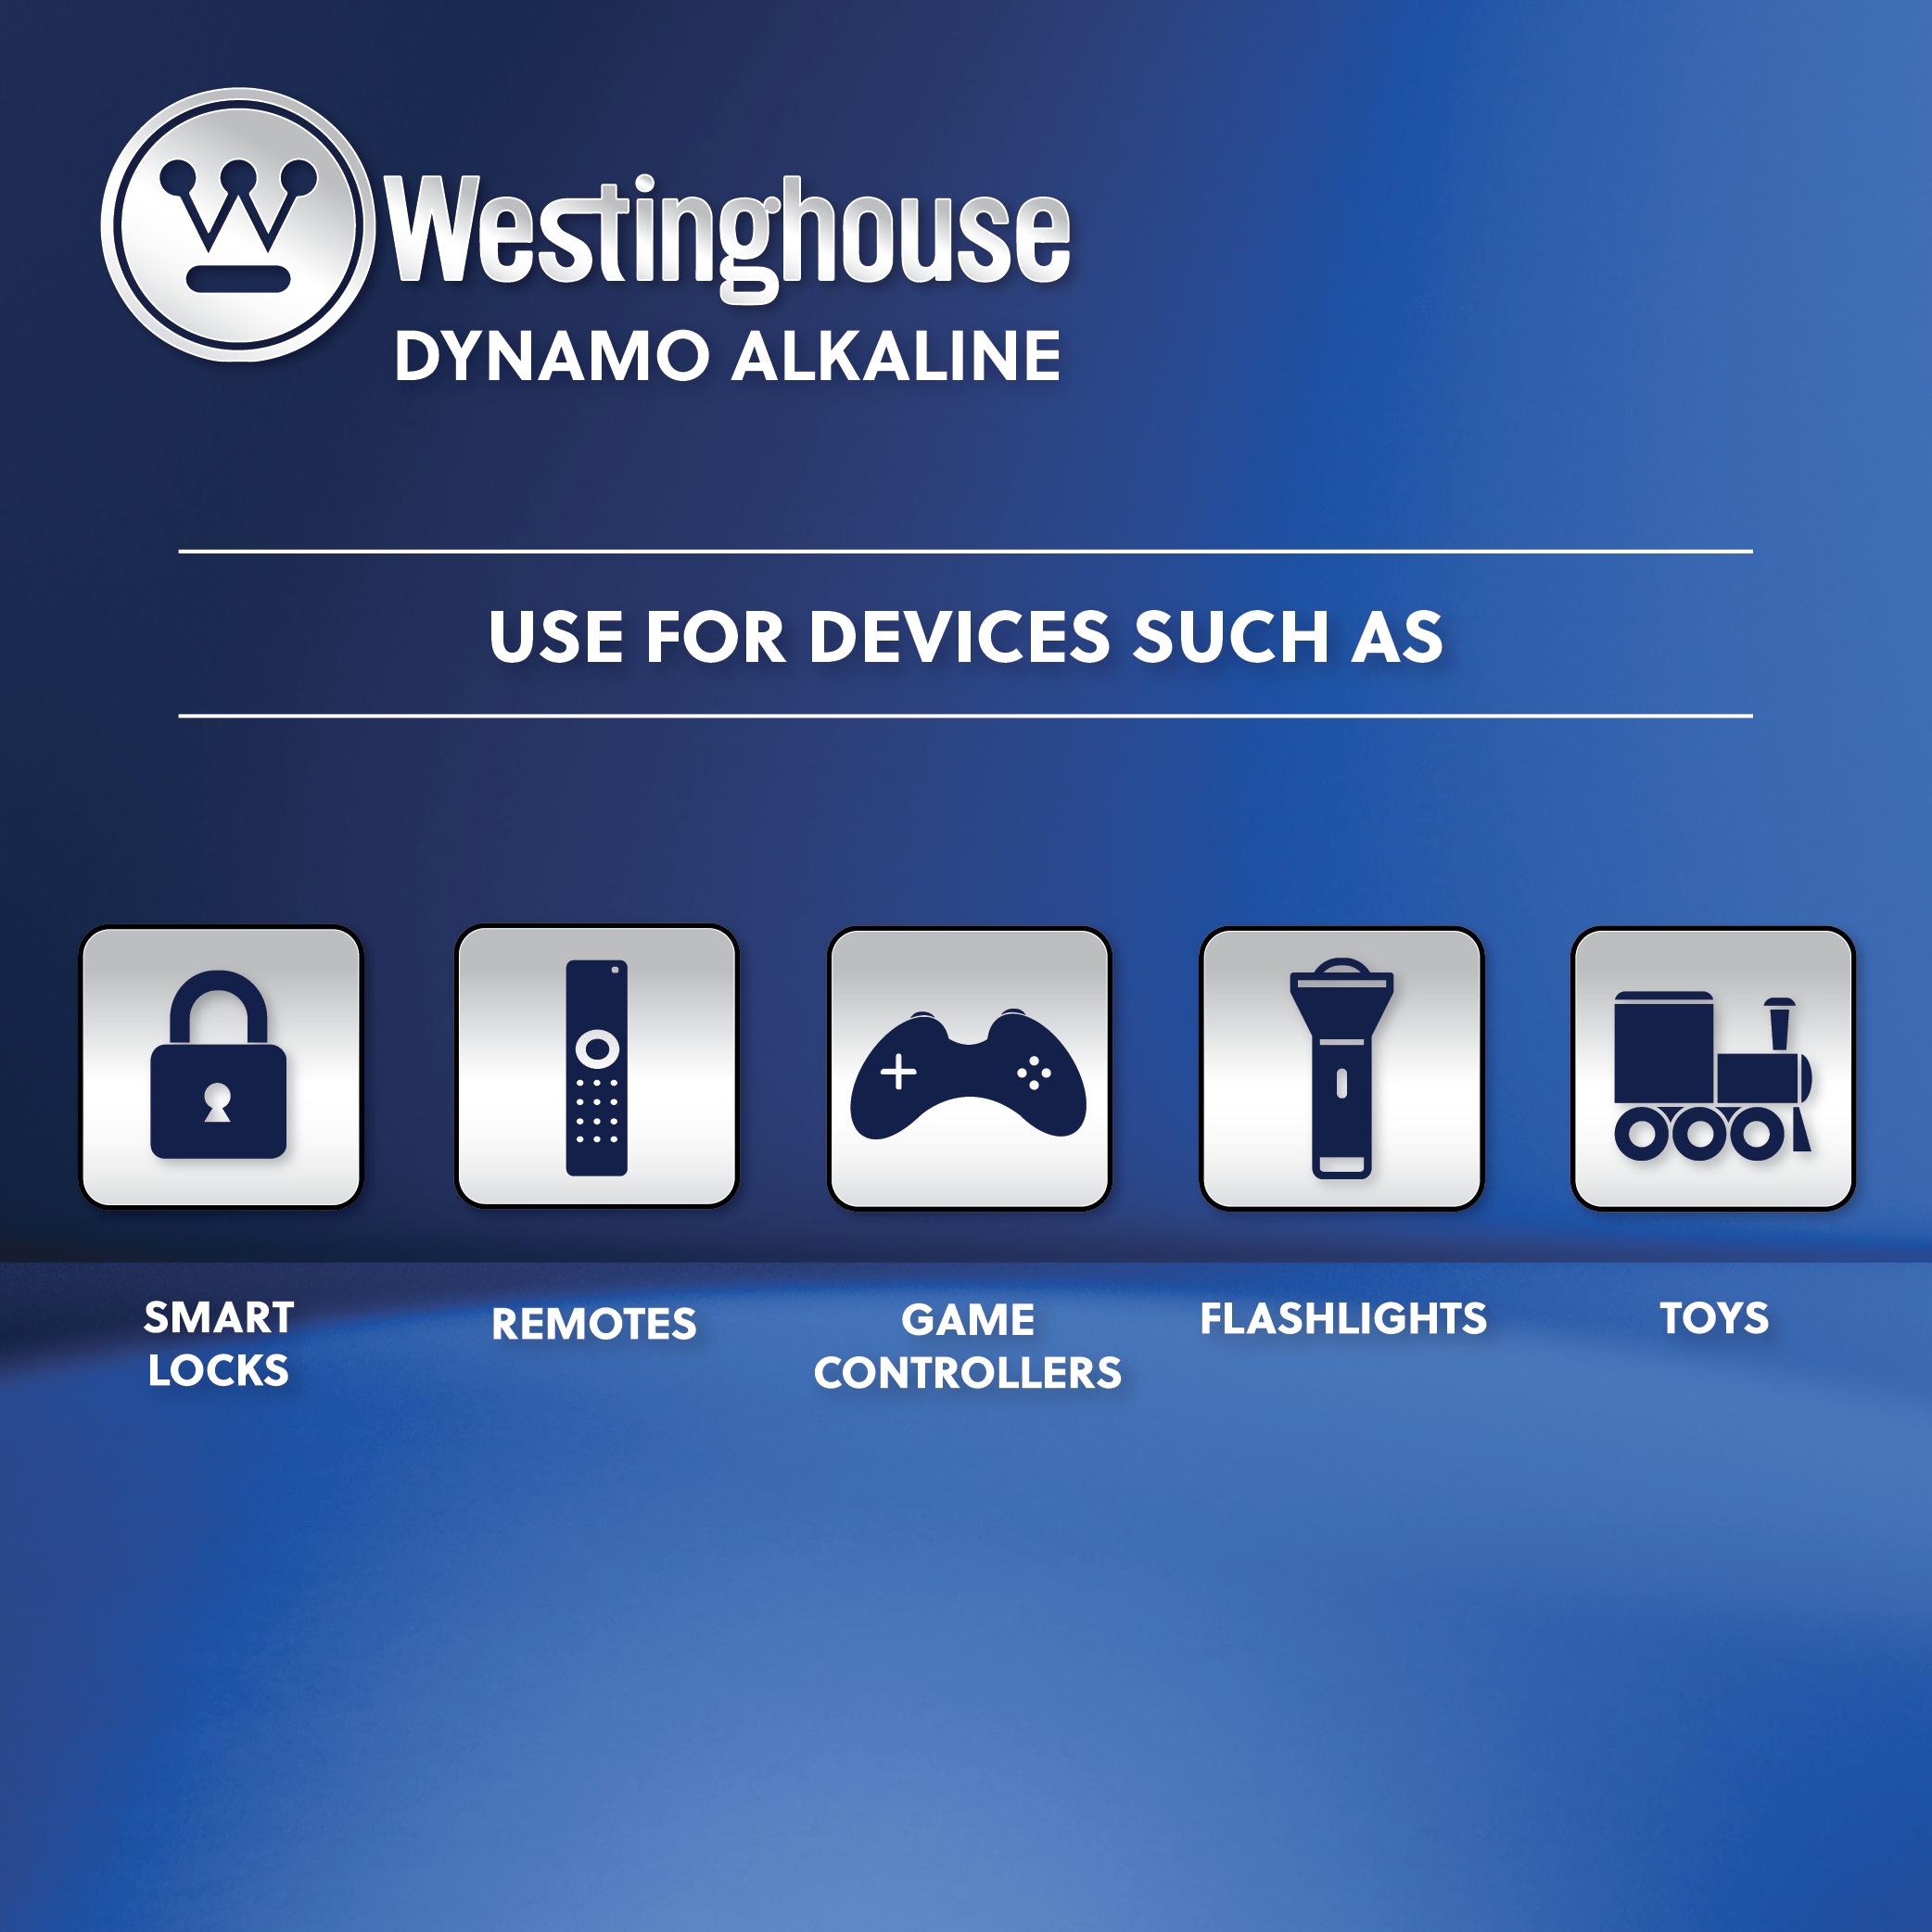 Westinghouse D Dynamo Alkaline Plastic Tub of 6